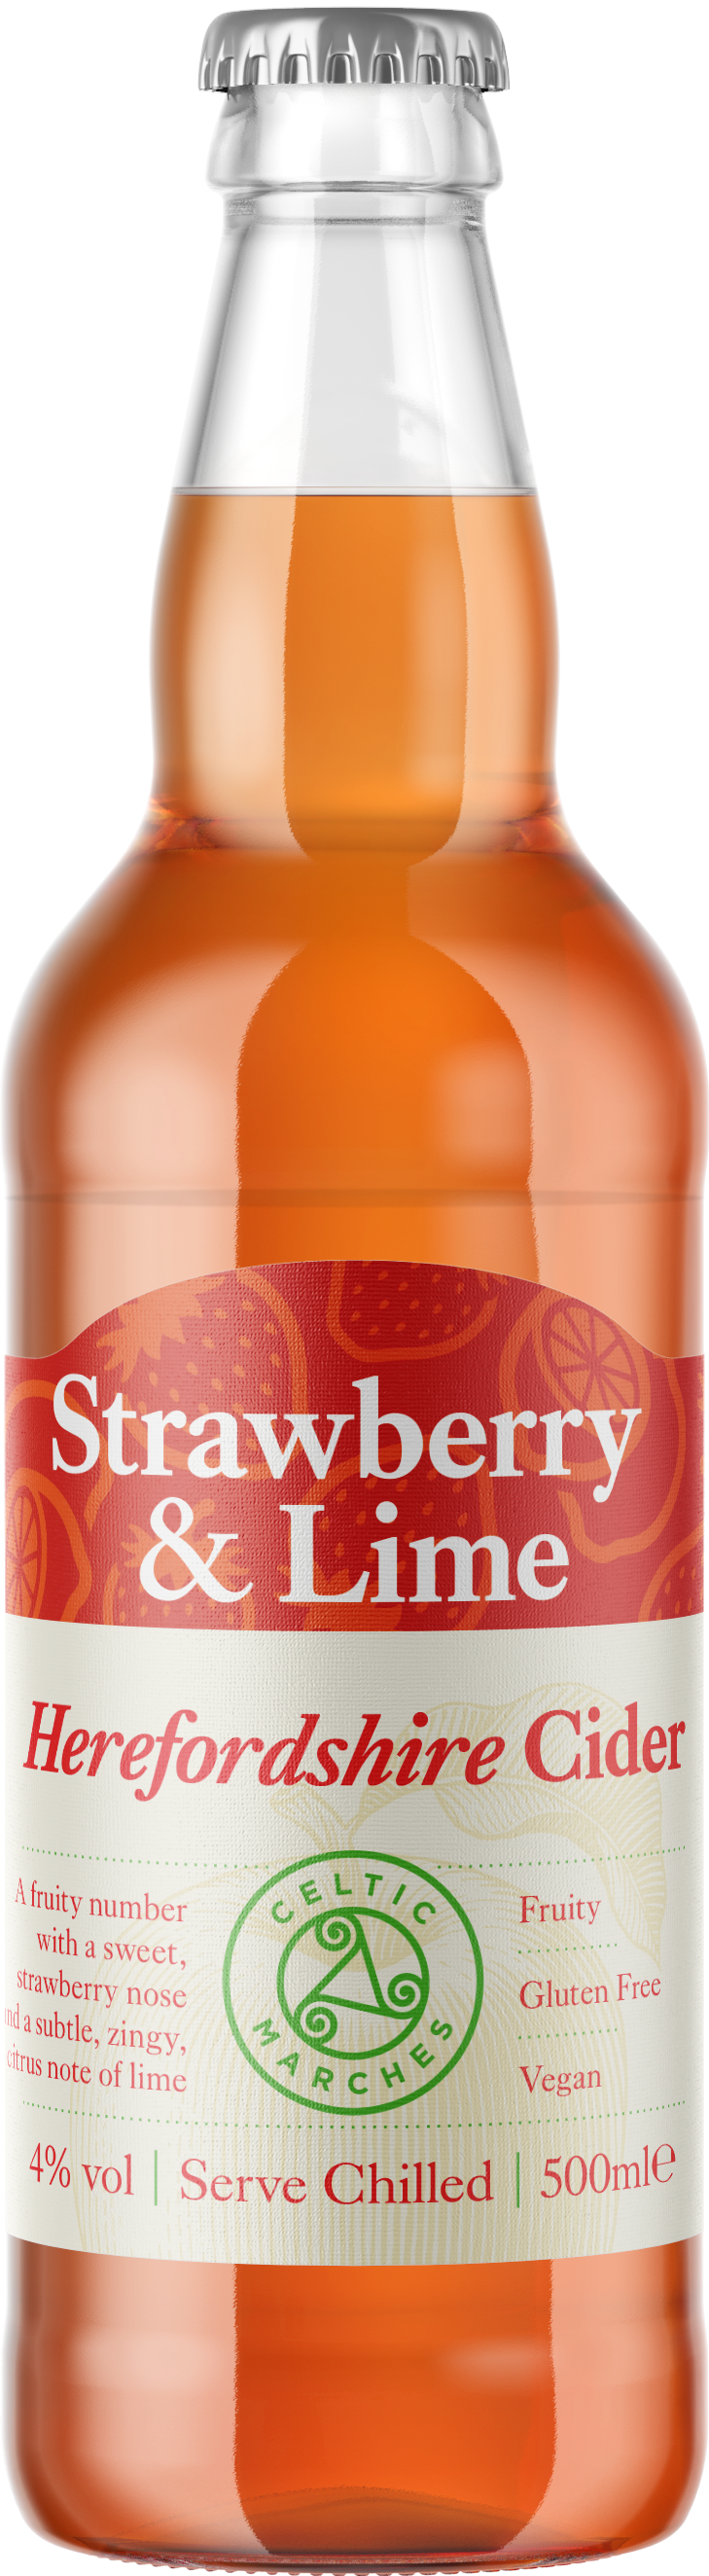 Strawberry & Lime 4% 12 x 500ml Bottles